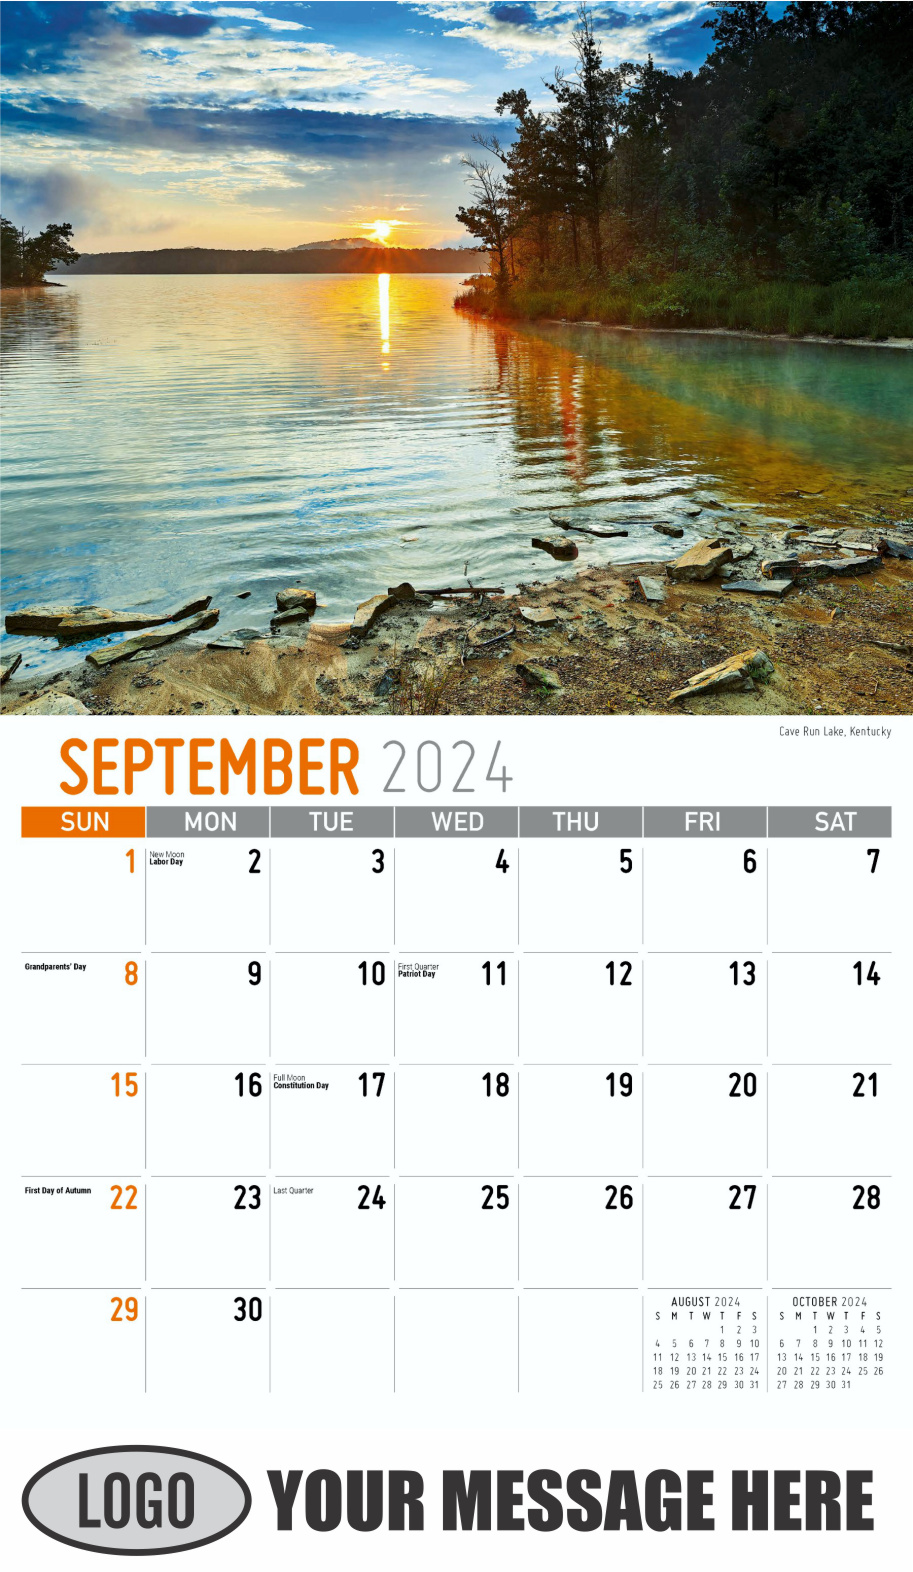 Scenes of Southeast USA 2024 Business Promo Wall Calendar - September